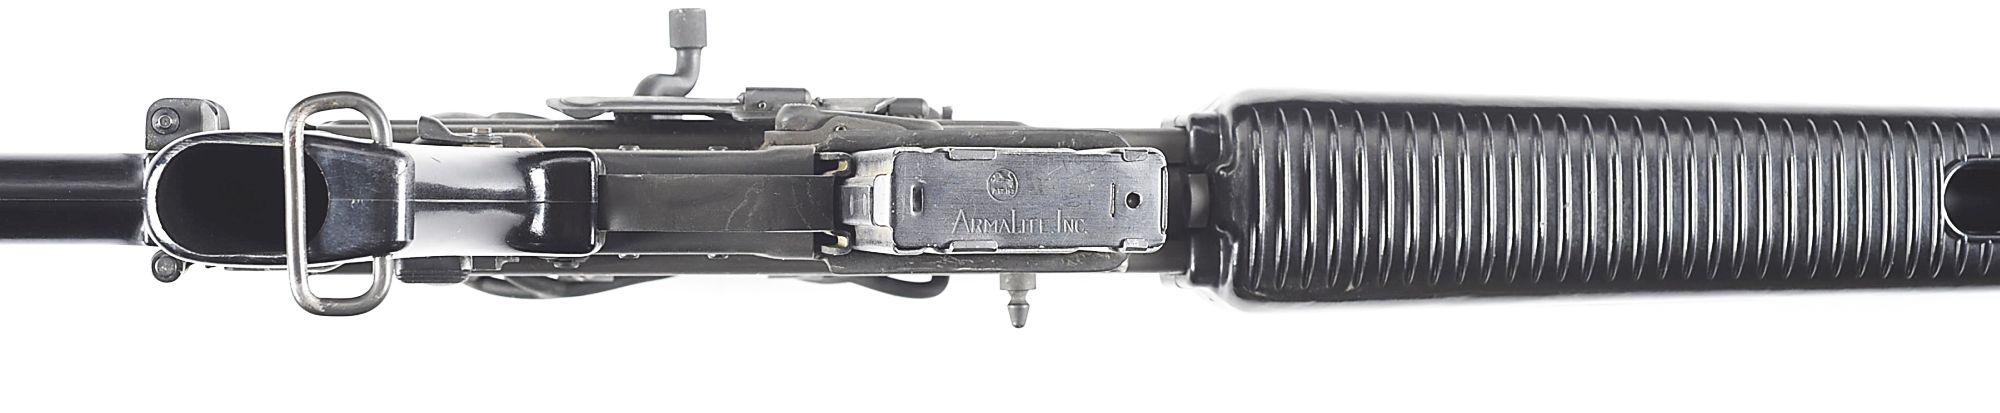 (C) SCARCE HOWA ARMALITE AR-180 SEMI AUTOMATIC RIFLE WITH SCOPE.